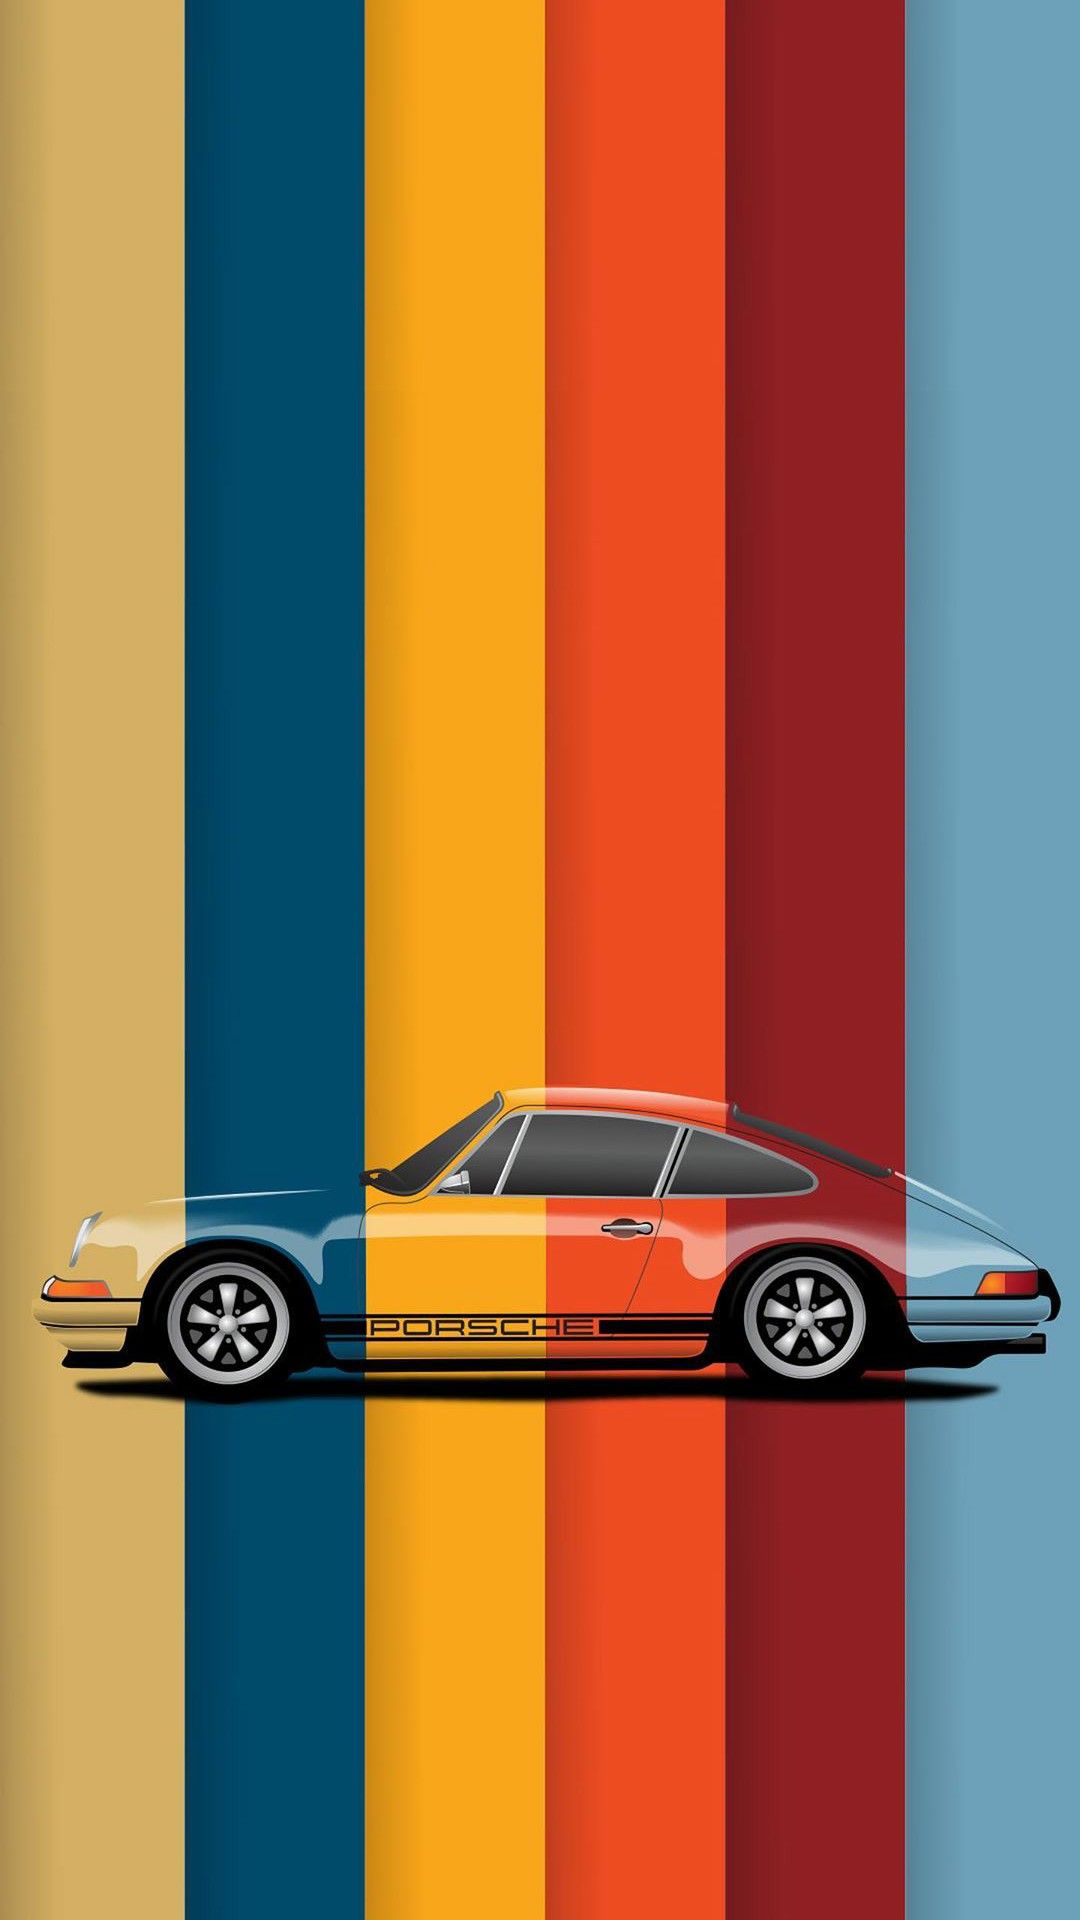 Porsche Minimal Wallpaper 1080X1920. Oneplus wallpaper, Xperia wallpaper, Htc wallpaper